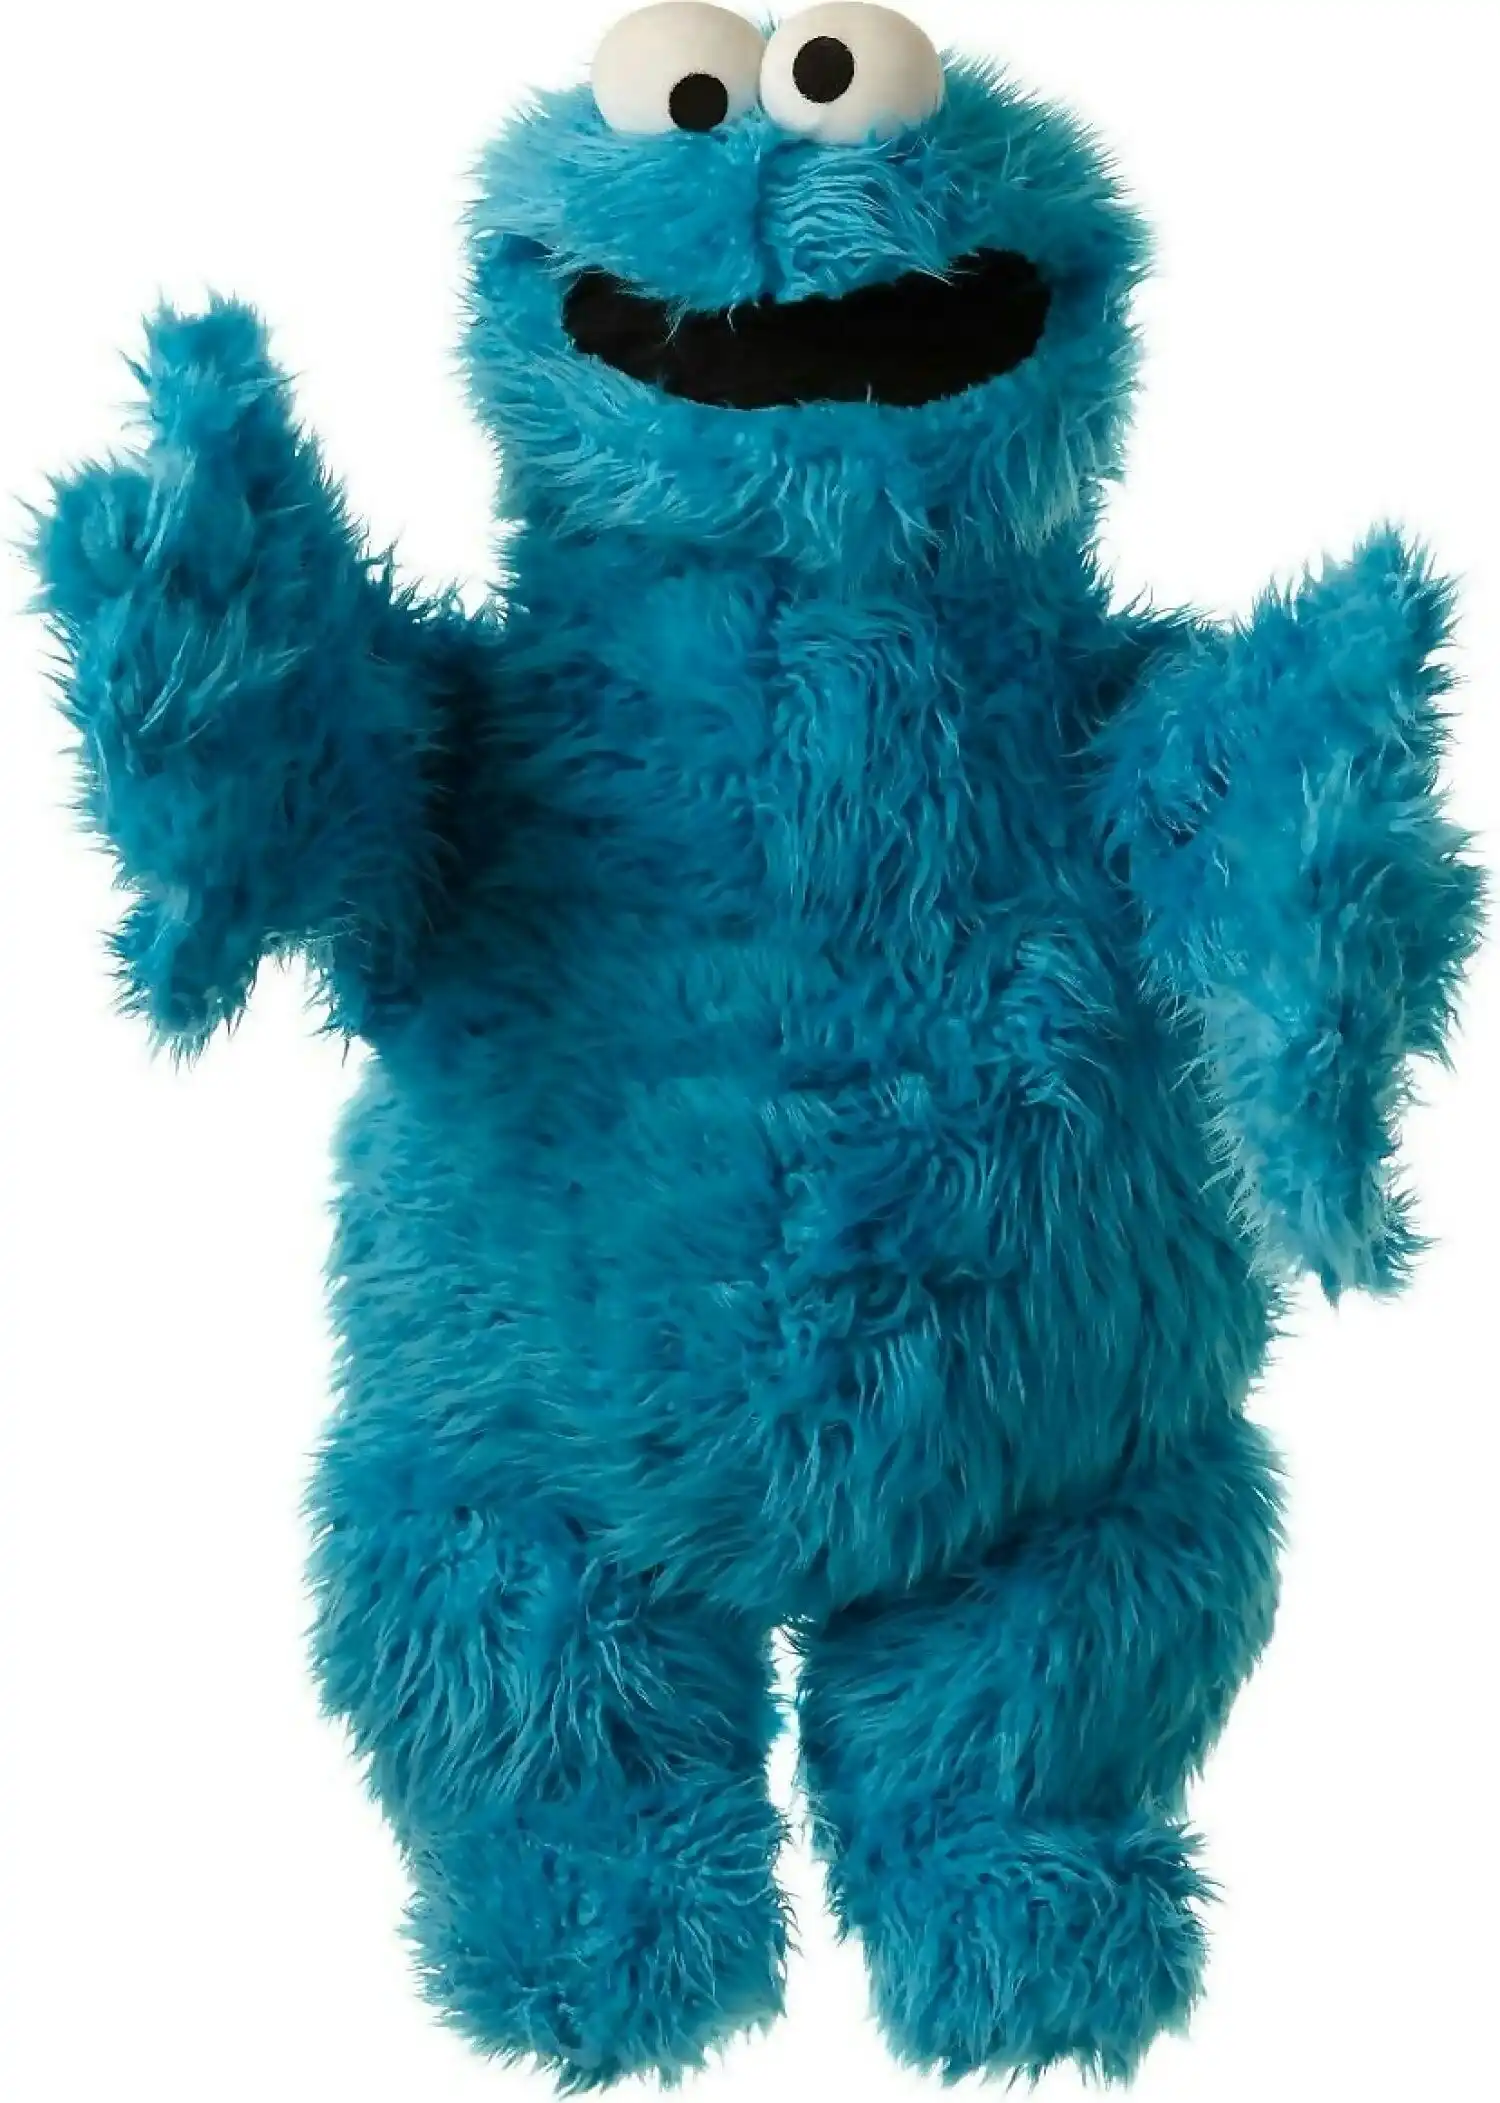 Sesame Street - Cookie Monster Hand Puppet 65cm Plush